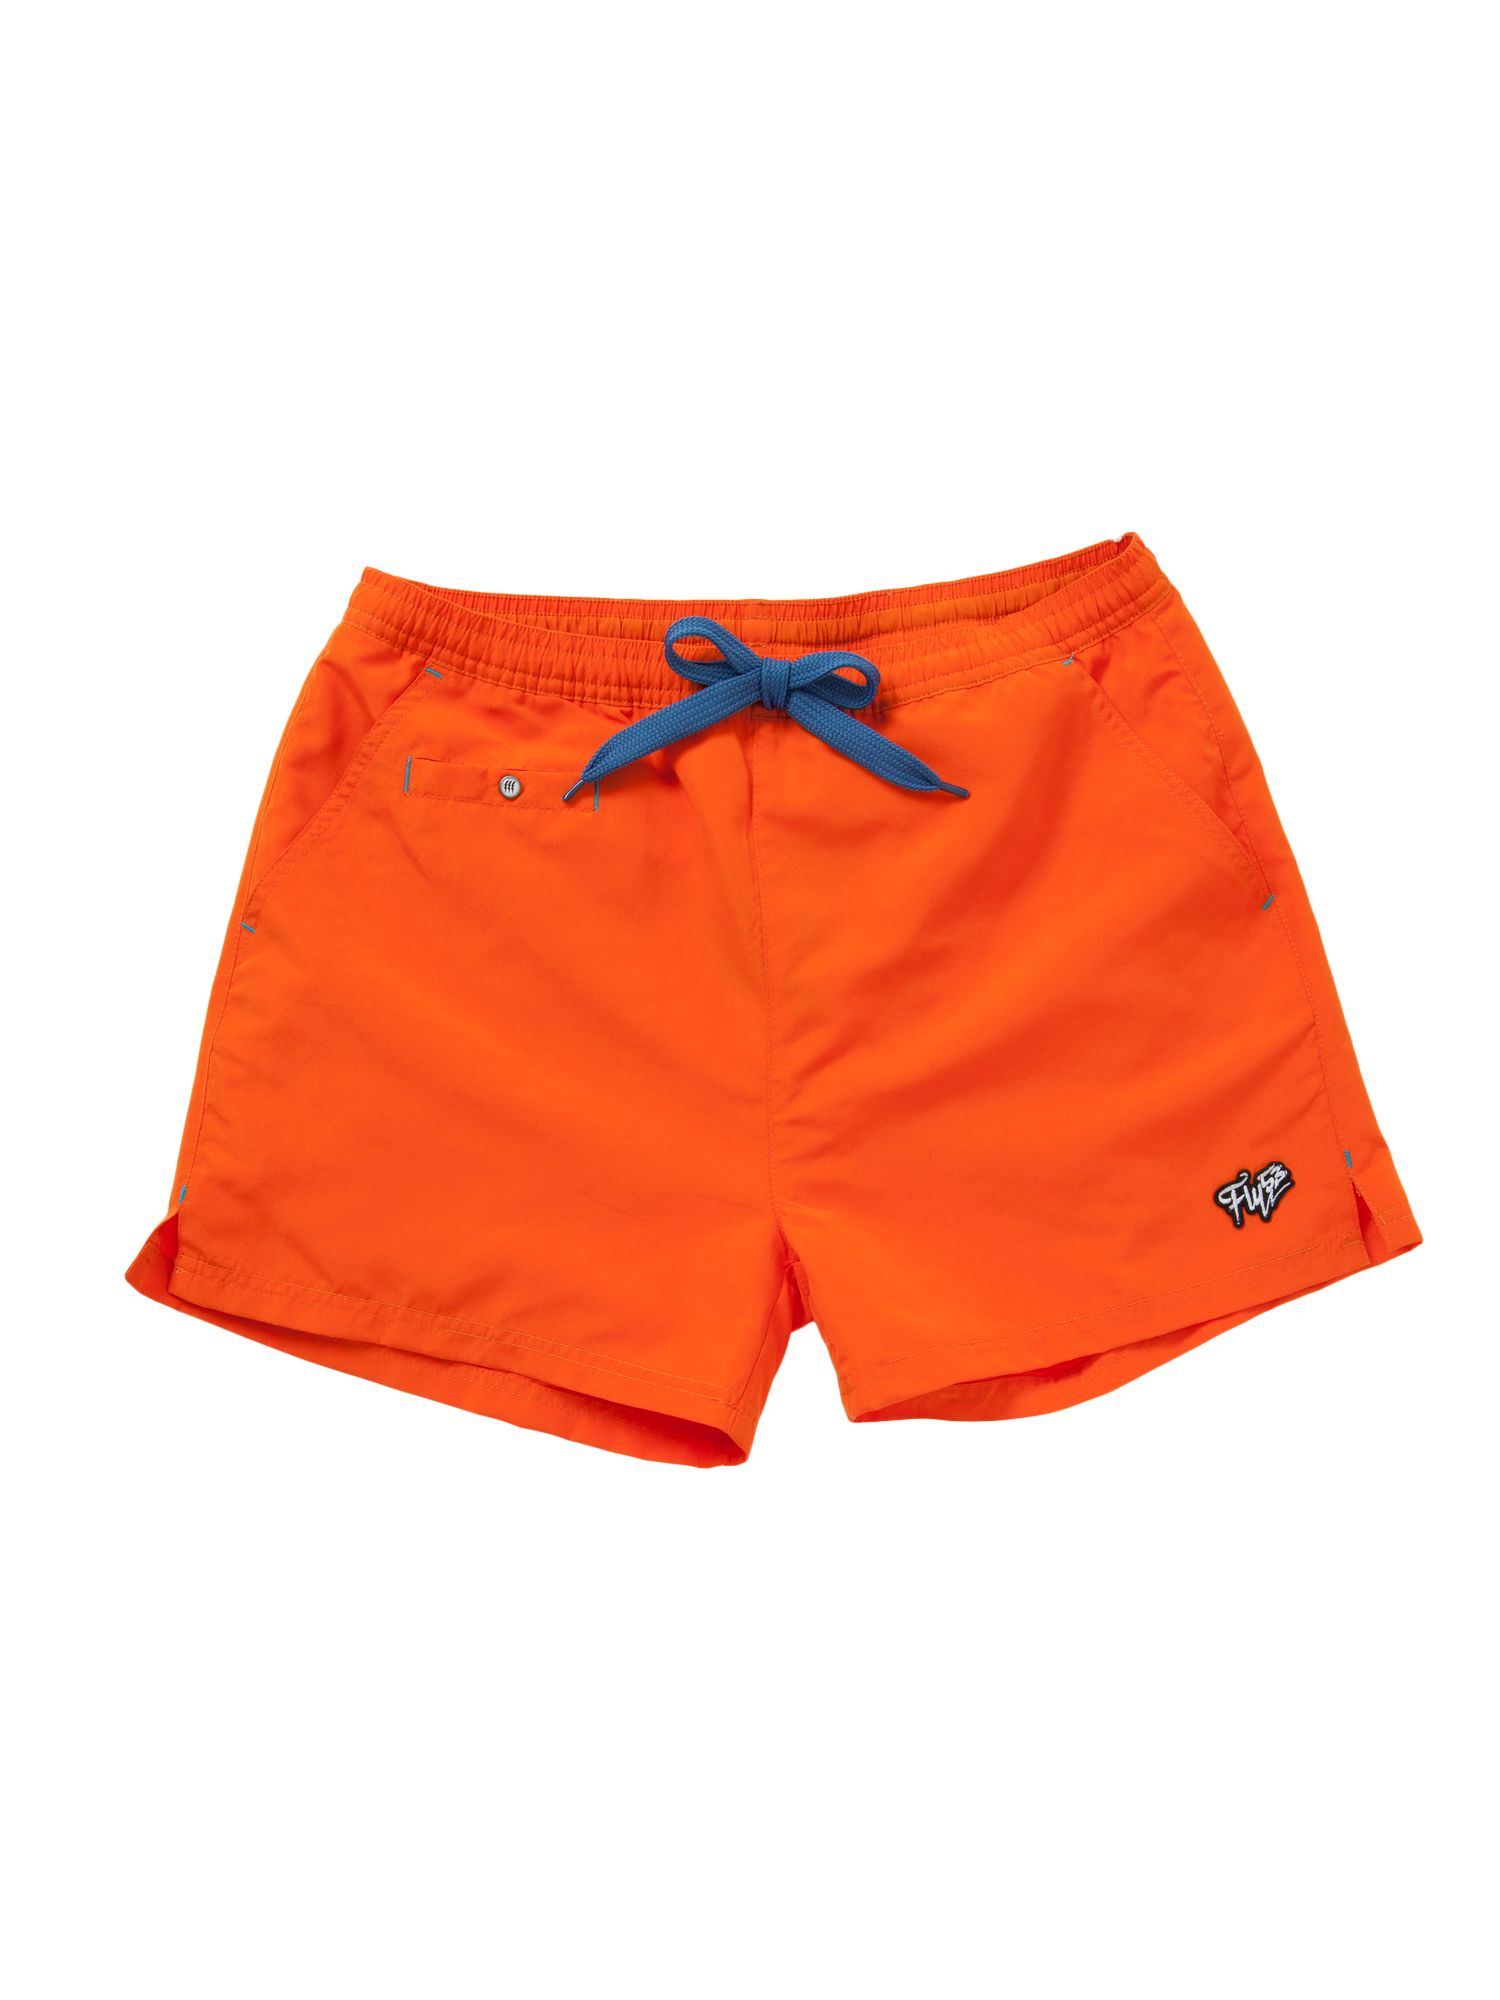 Fly53 Shark Jersey Shorts in Orange for Men | Lyst